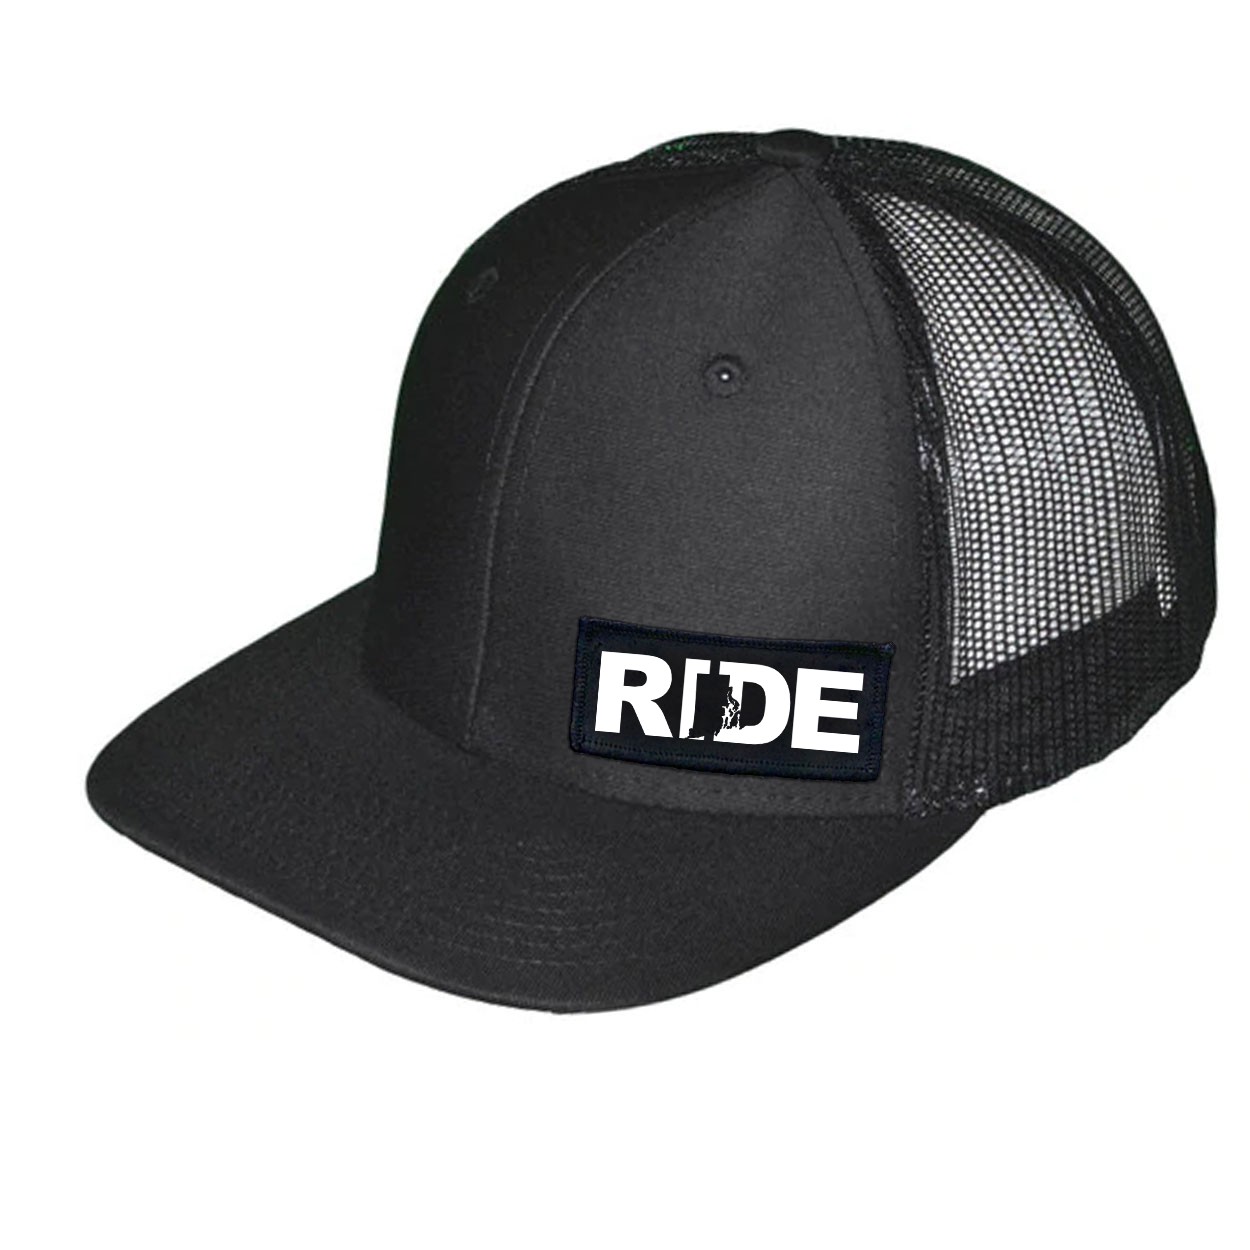 Ride Rhode Island Night Out Woven Patch Snapback Trucker Hat Black (White Logo)